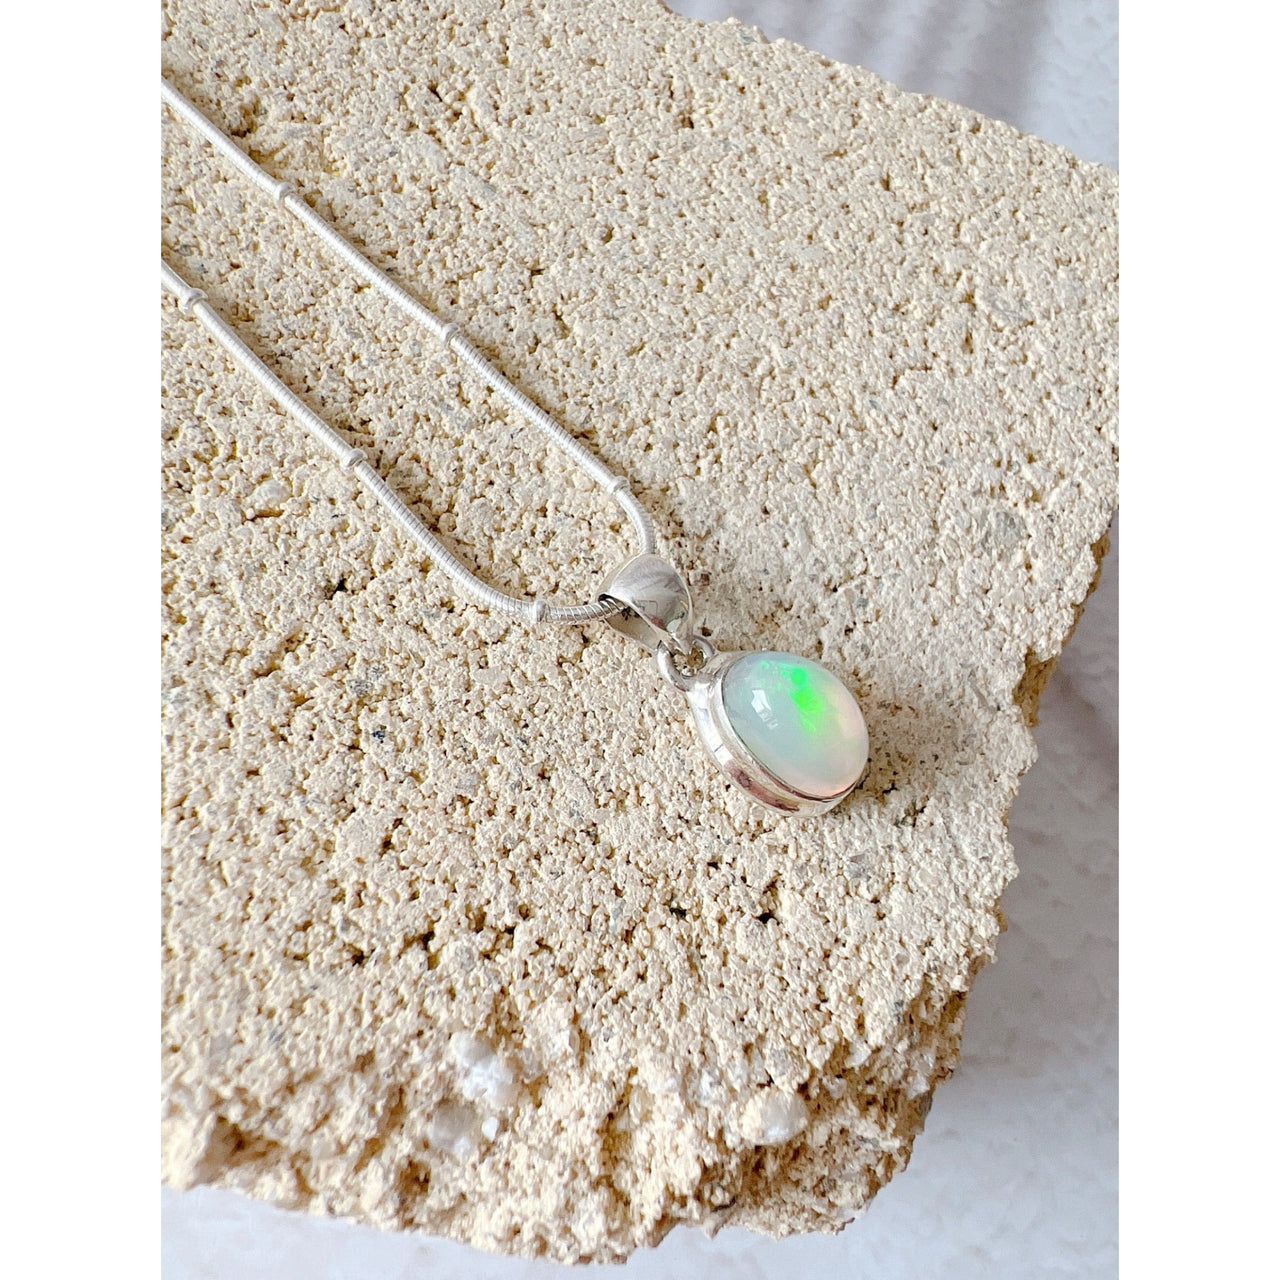 Ethiopian Opal Pendant